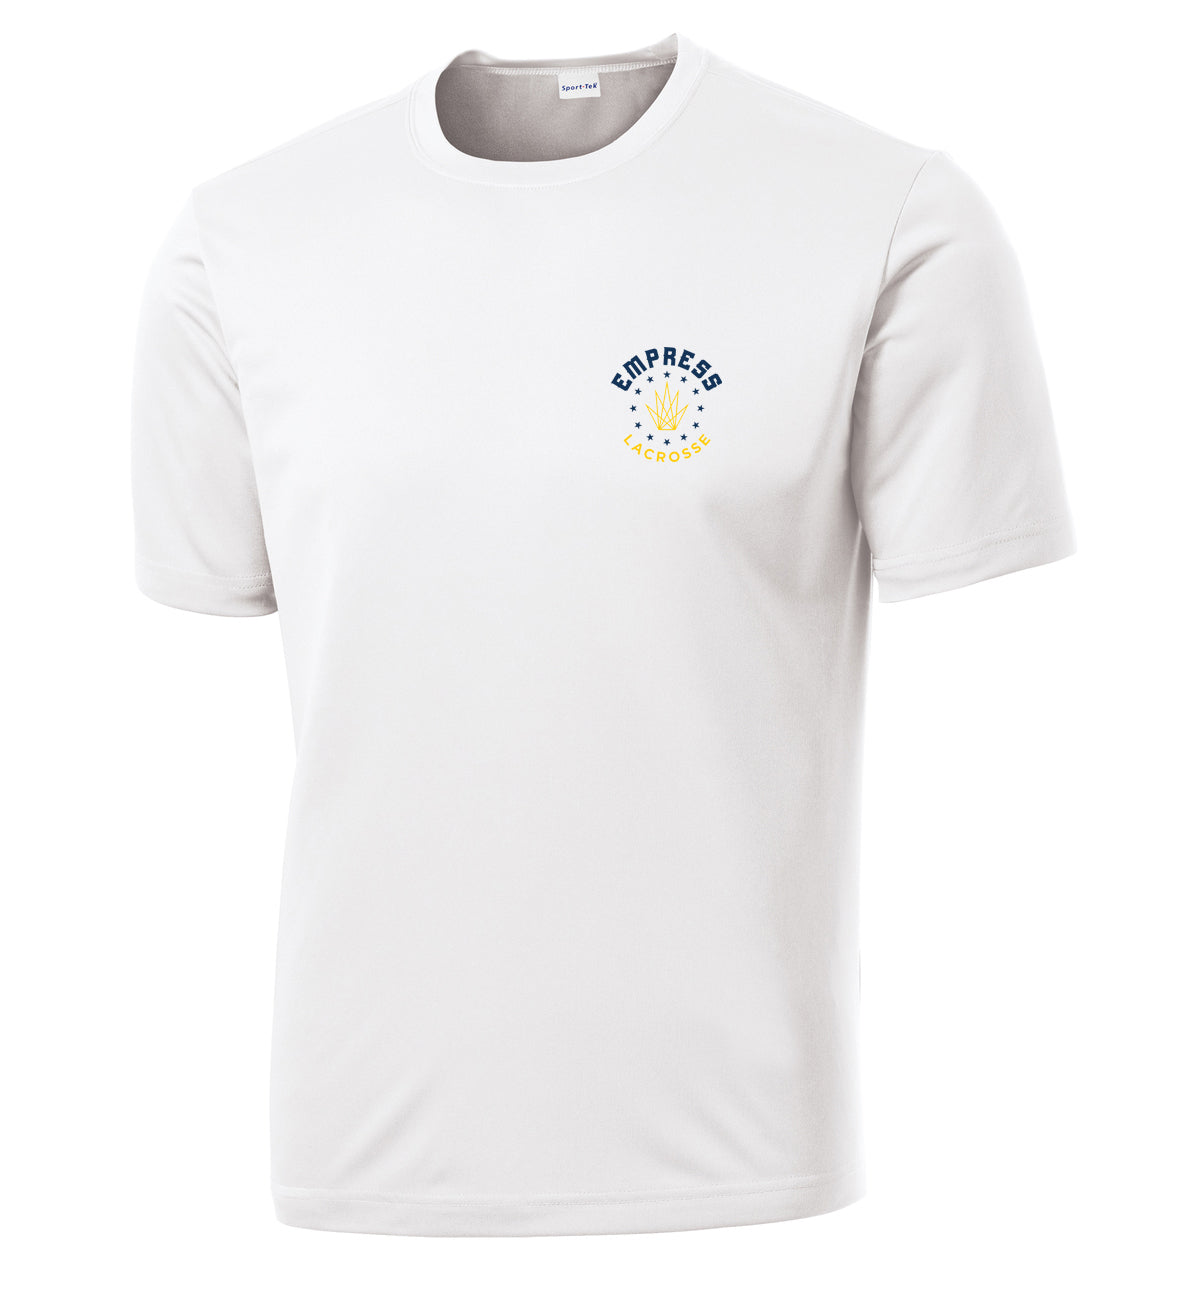 Empress Lacrosse White Performance T-Shirt